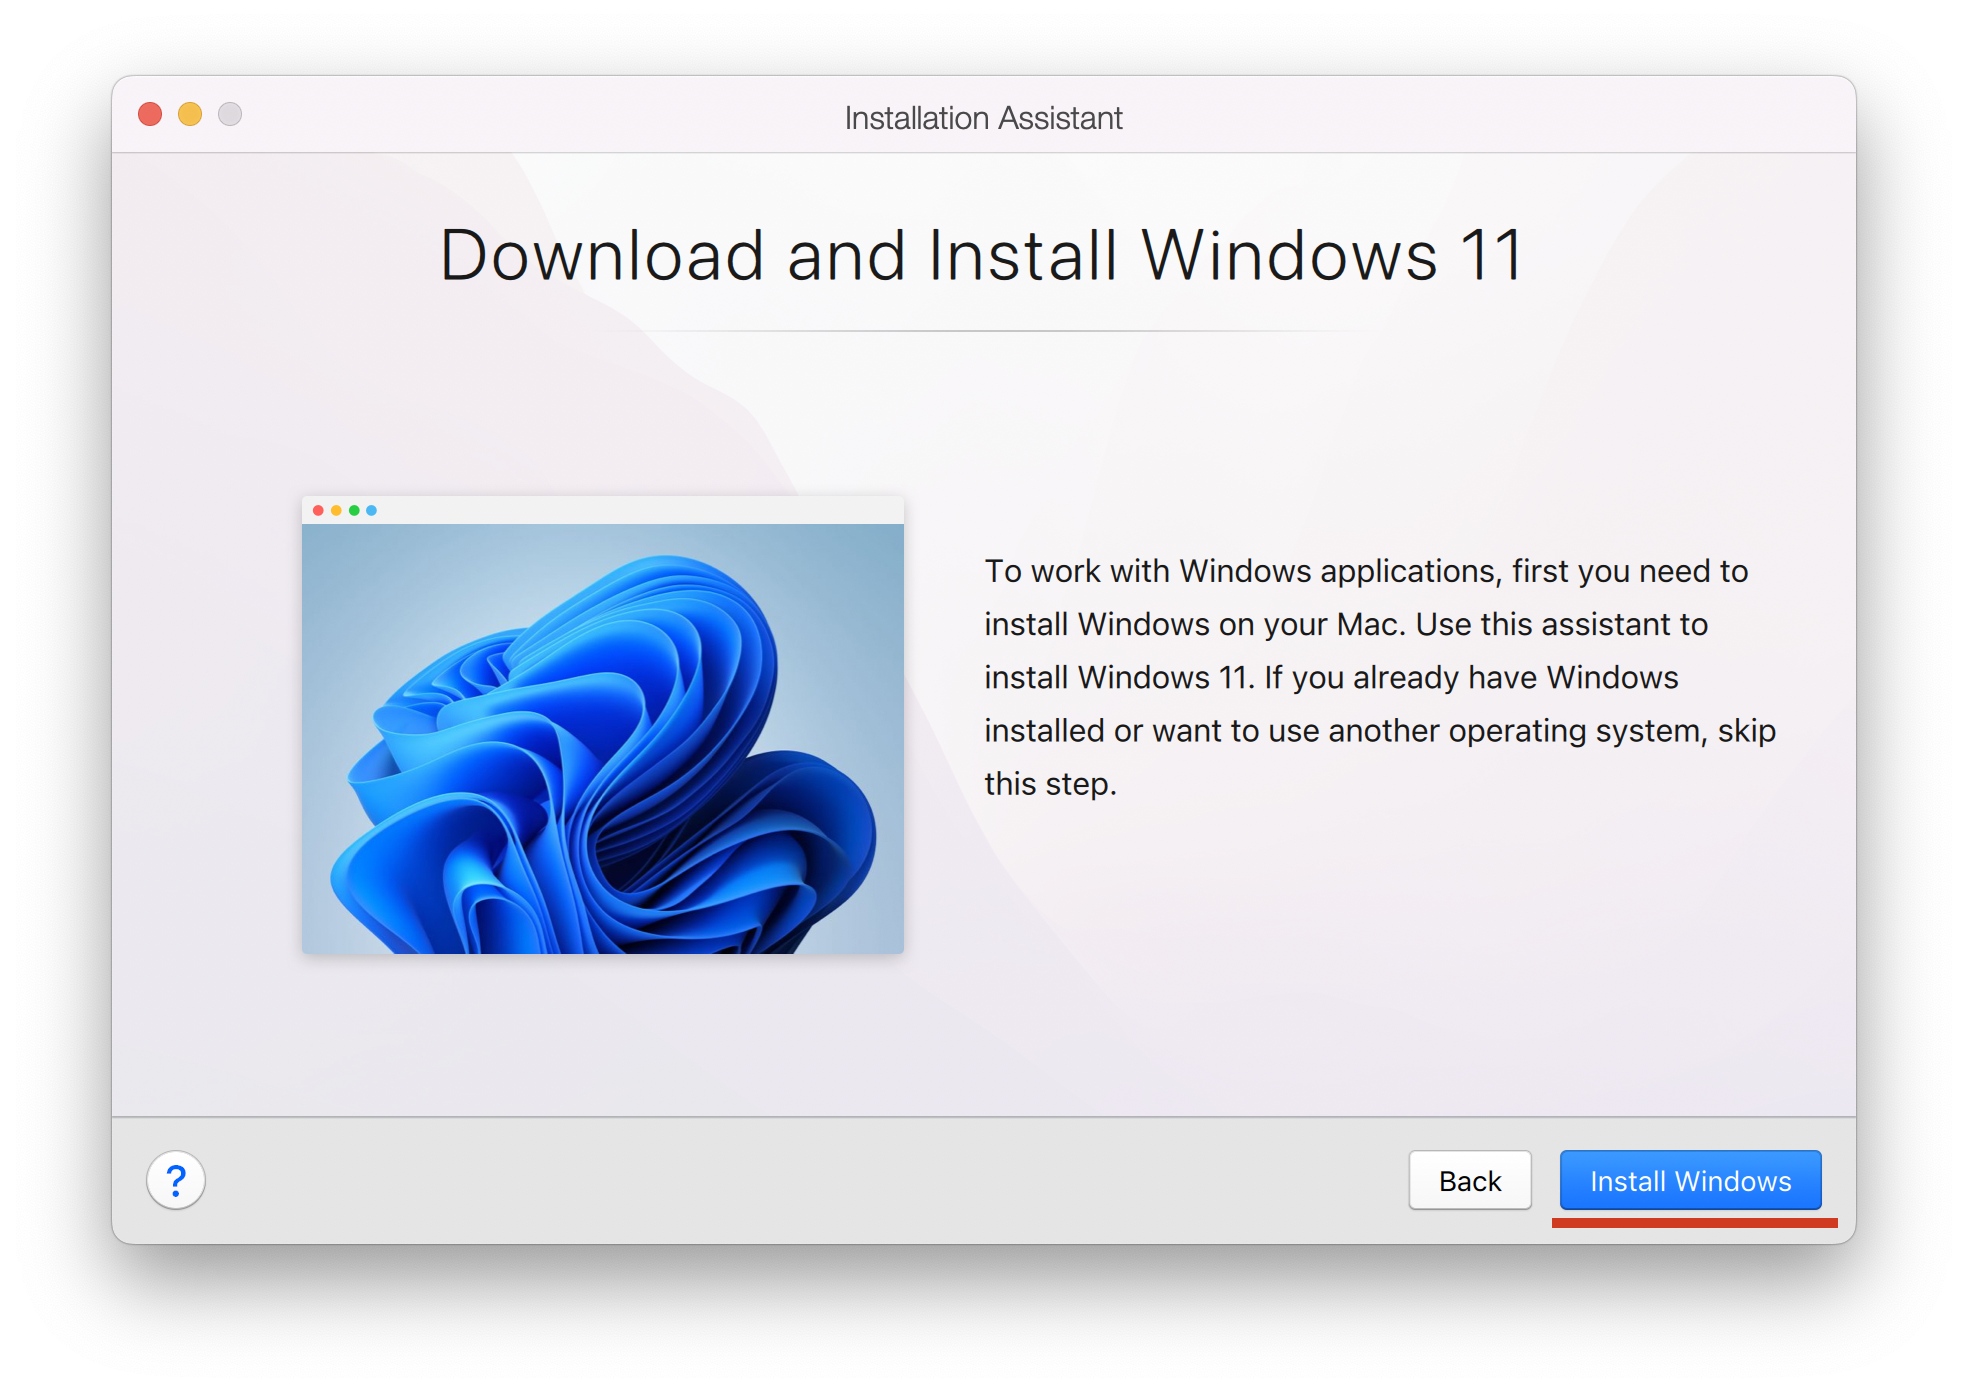 Install Windows 11 on a Mac with an Intel processor